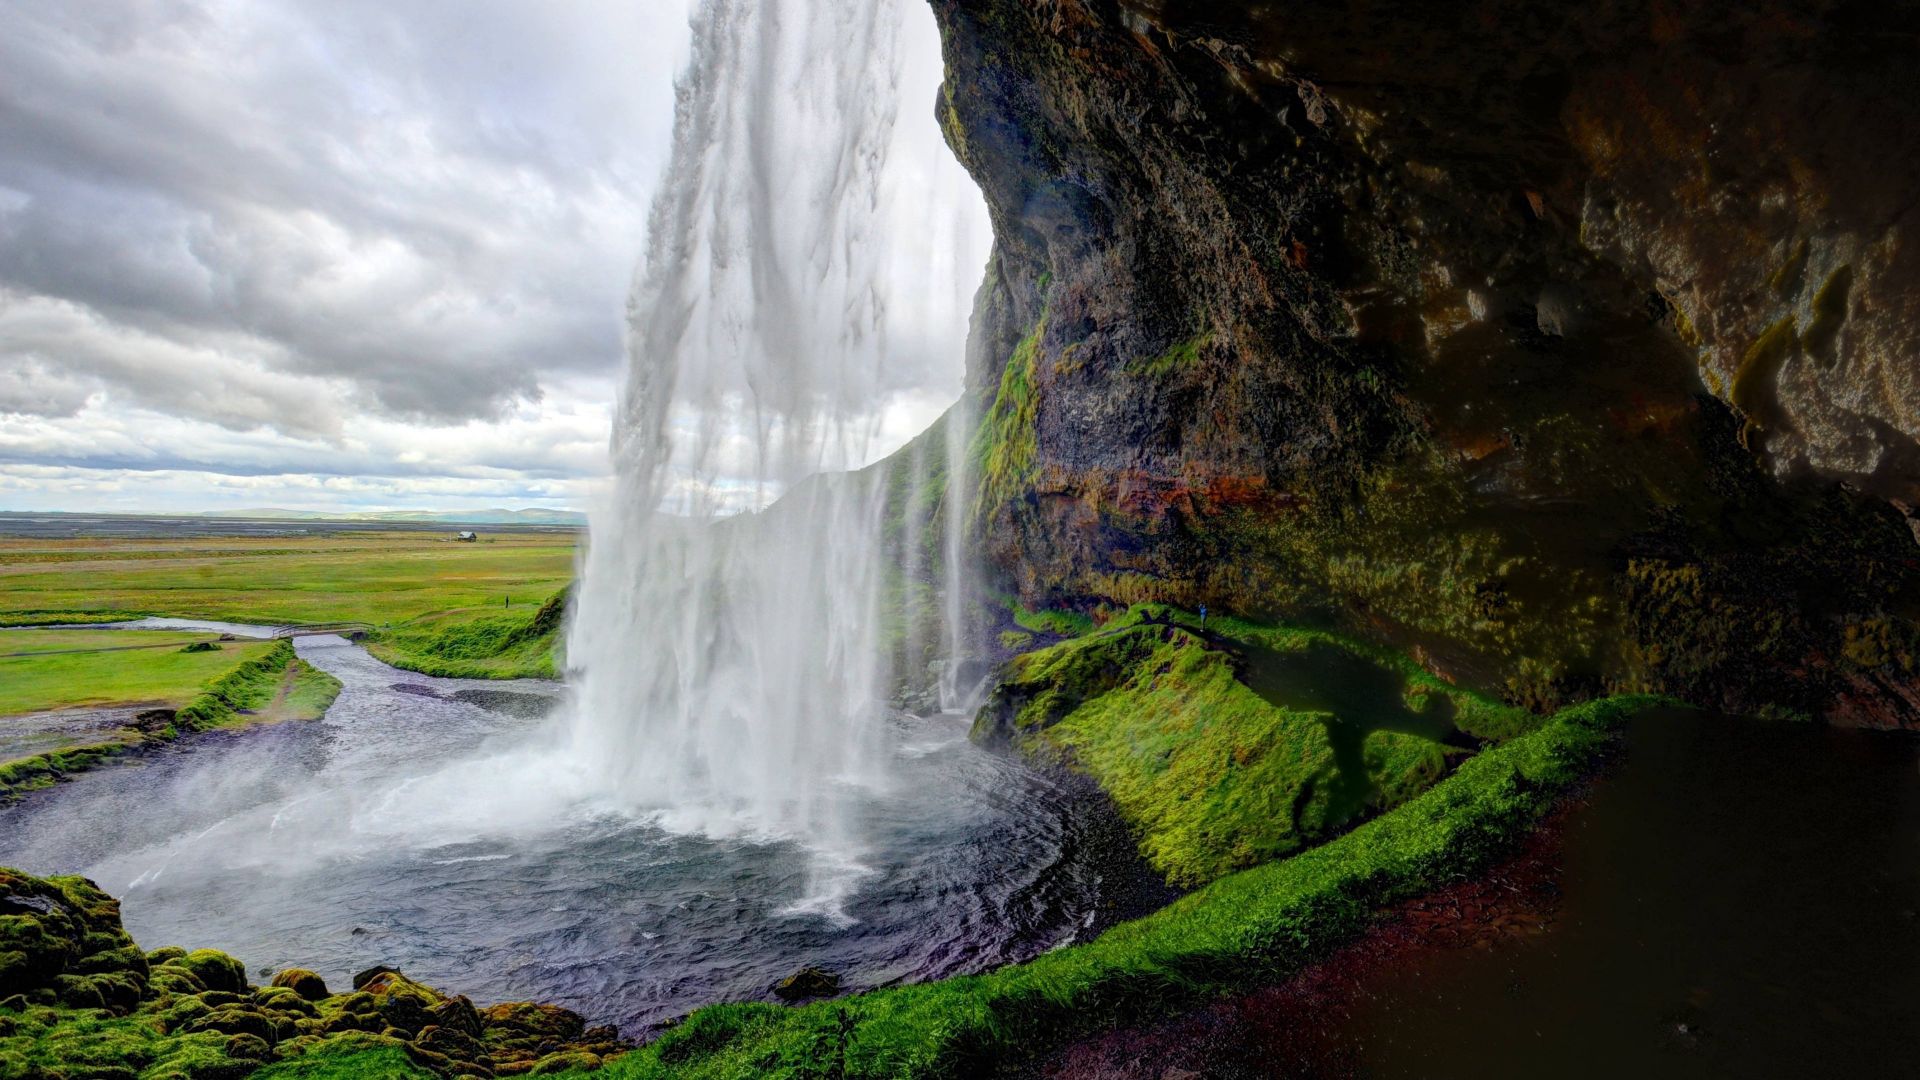 Сельяландсфосс, 5k, 4k, Исландия, водопад, путешествие, туризм, Seljalandsfoss, 5k, 4k wallpaper, Iceland, waterfall, travel, tourism (horizontal)